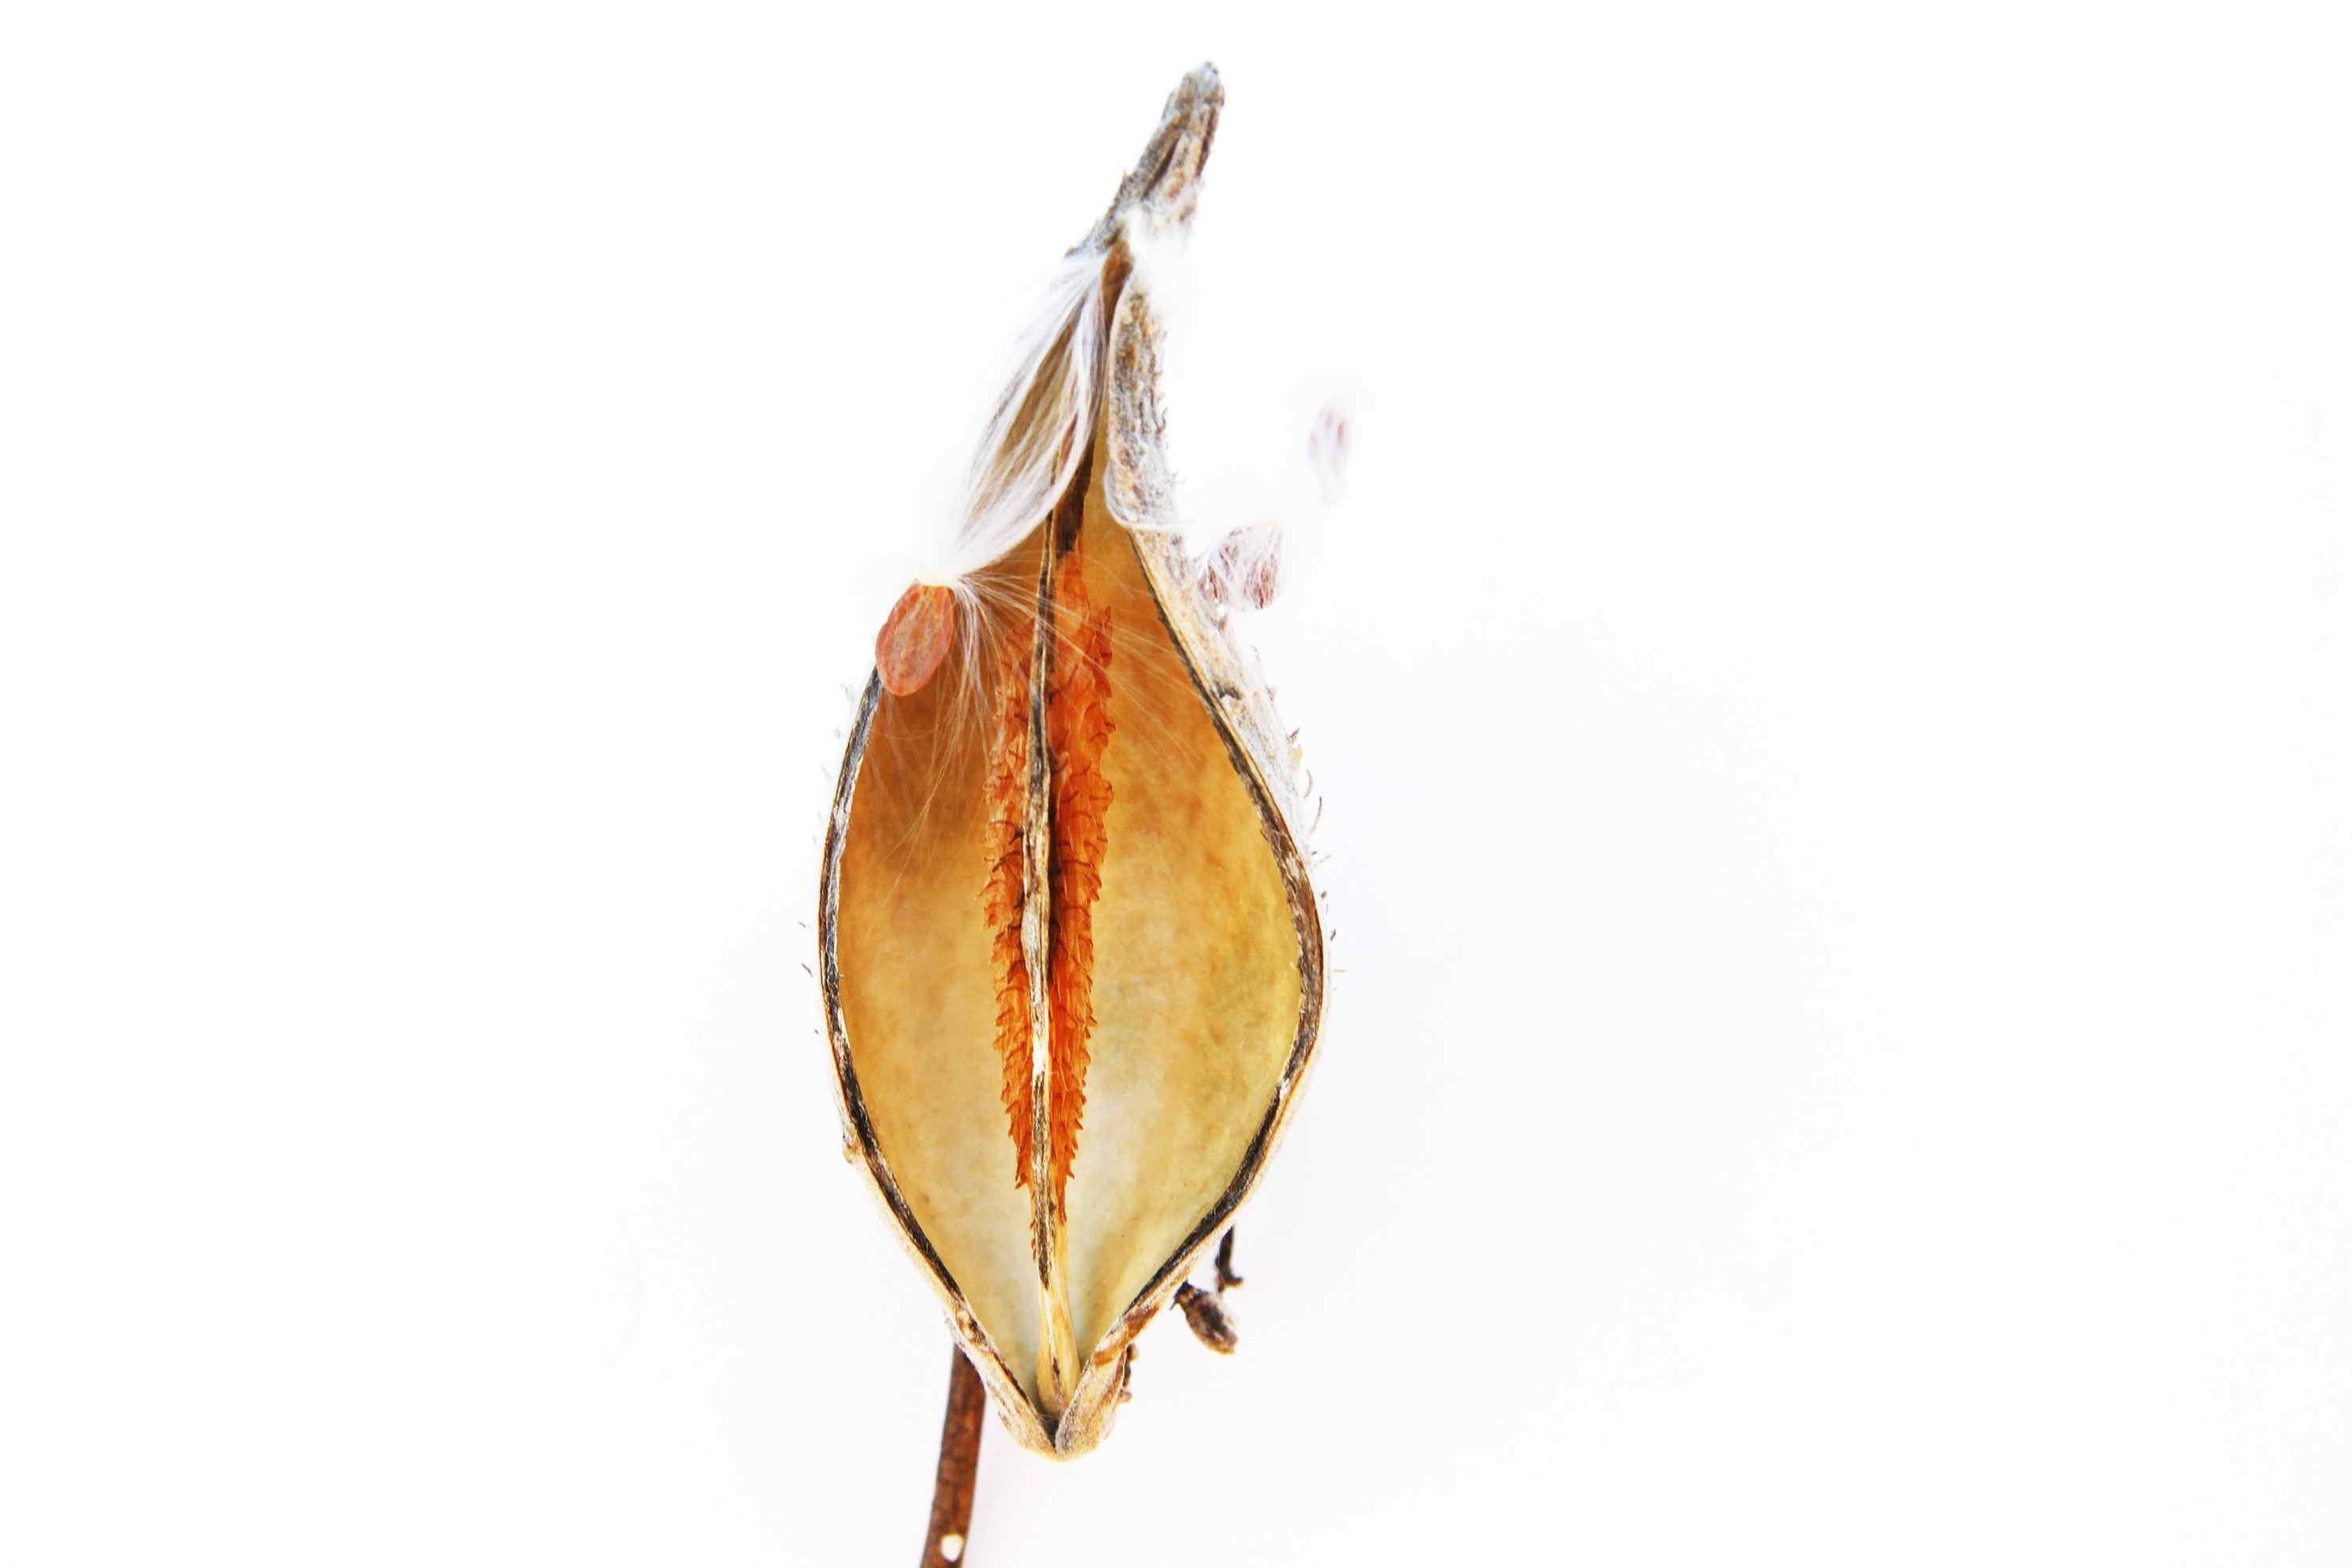 milkweed pod in winter